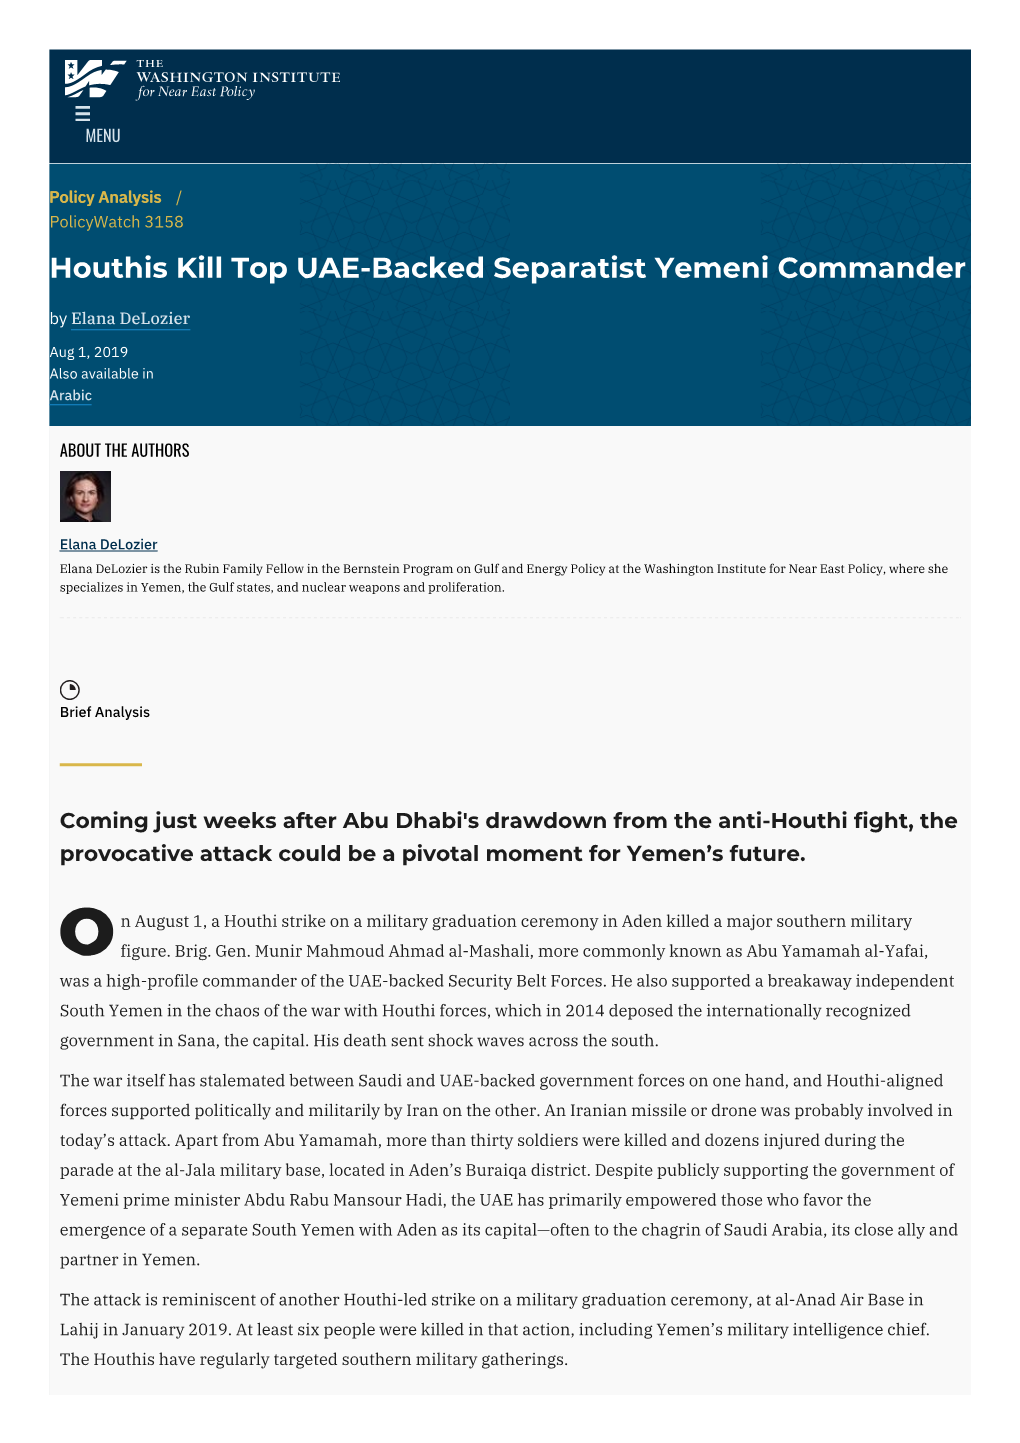 Houthis Kill Top UAE-Backed Separatist Yemeni Commander by Elana Delozier